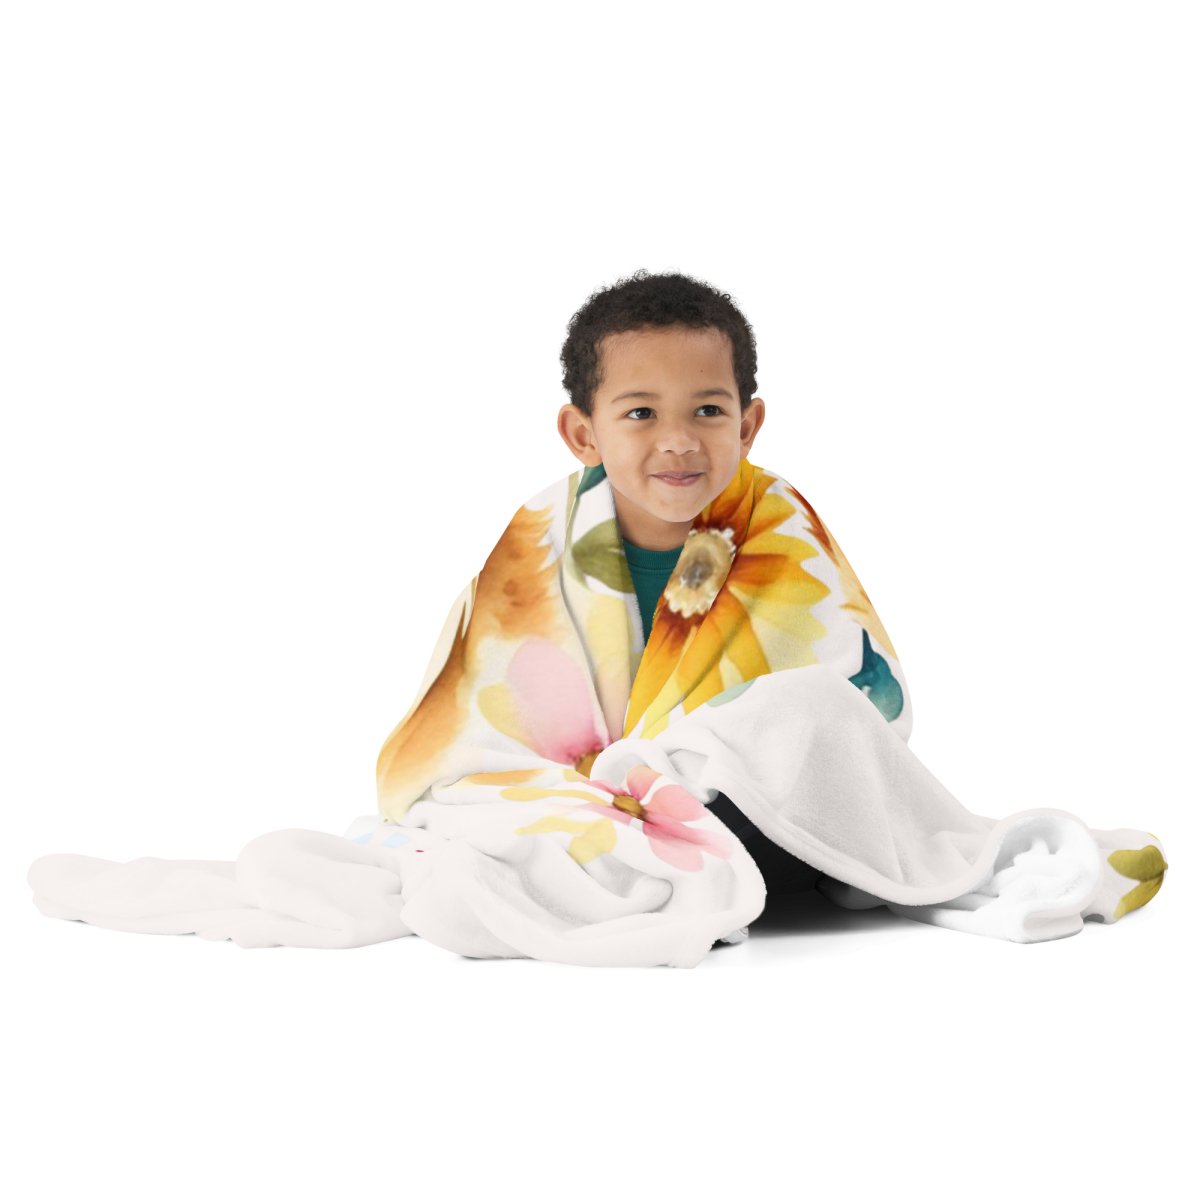 Romantic Golden Retriever Throw Blanket - Funny Nikko